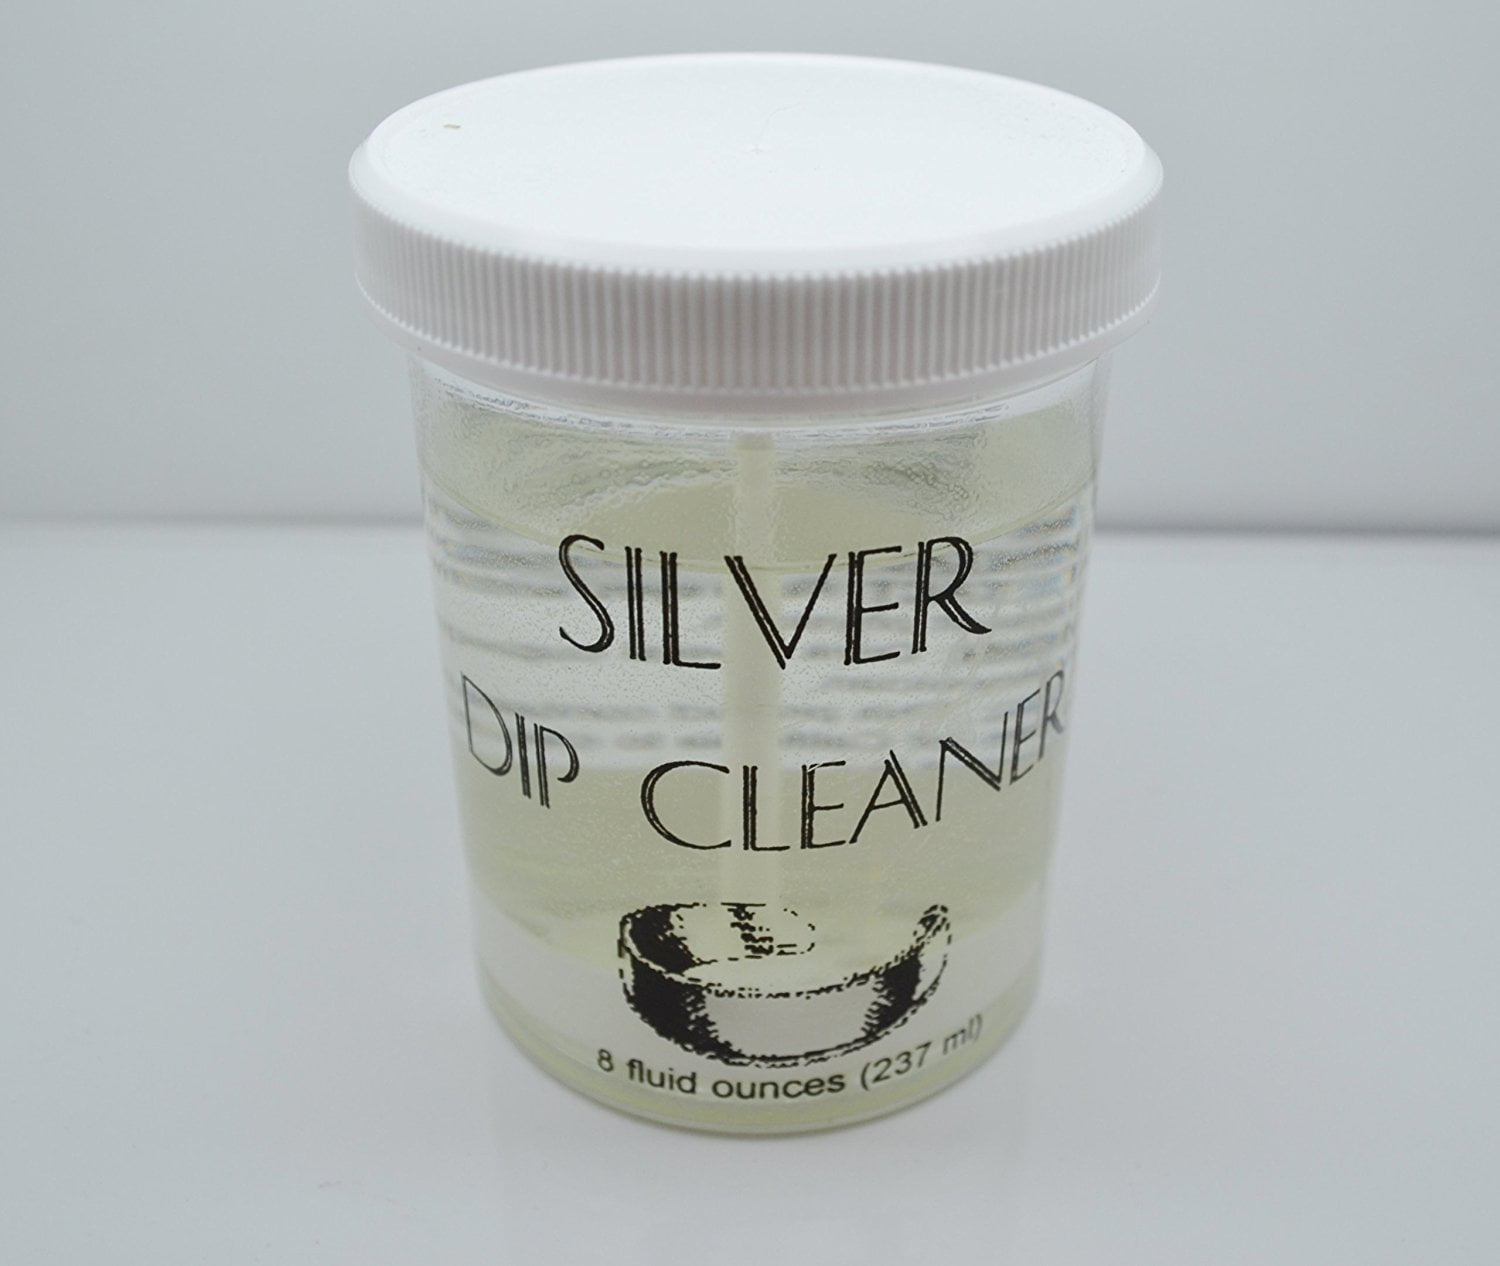 JSP Silver Jewelry Dip Cleaner Solution 08 FL. oz .237ML